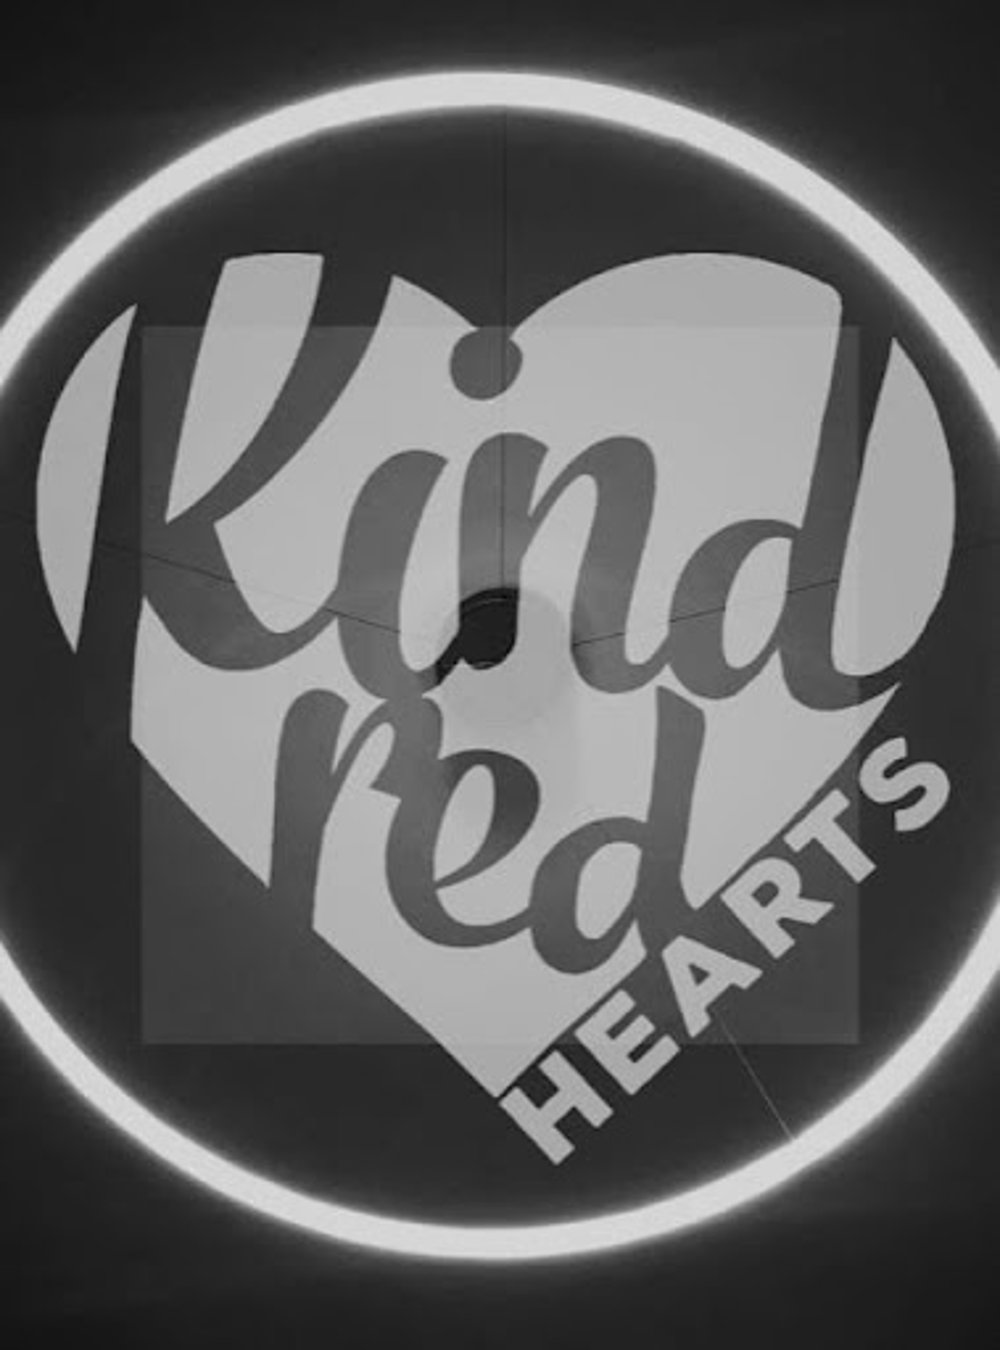 Kindred Hearts #1029